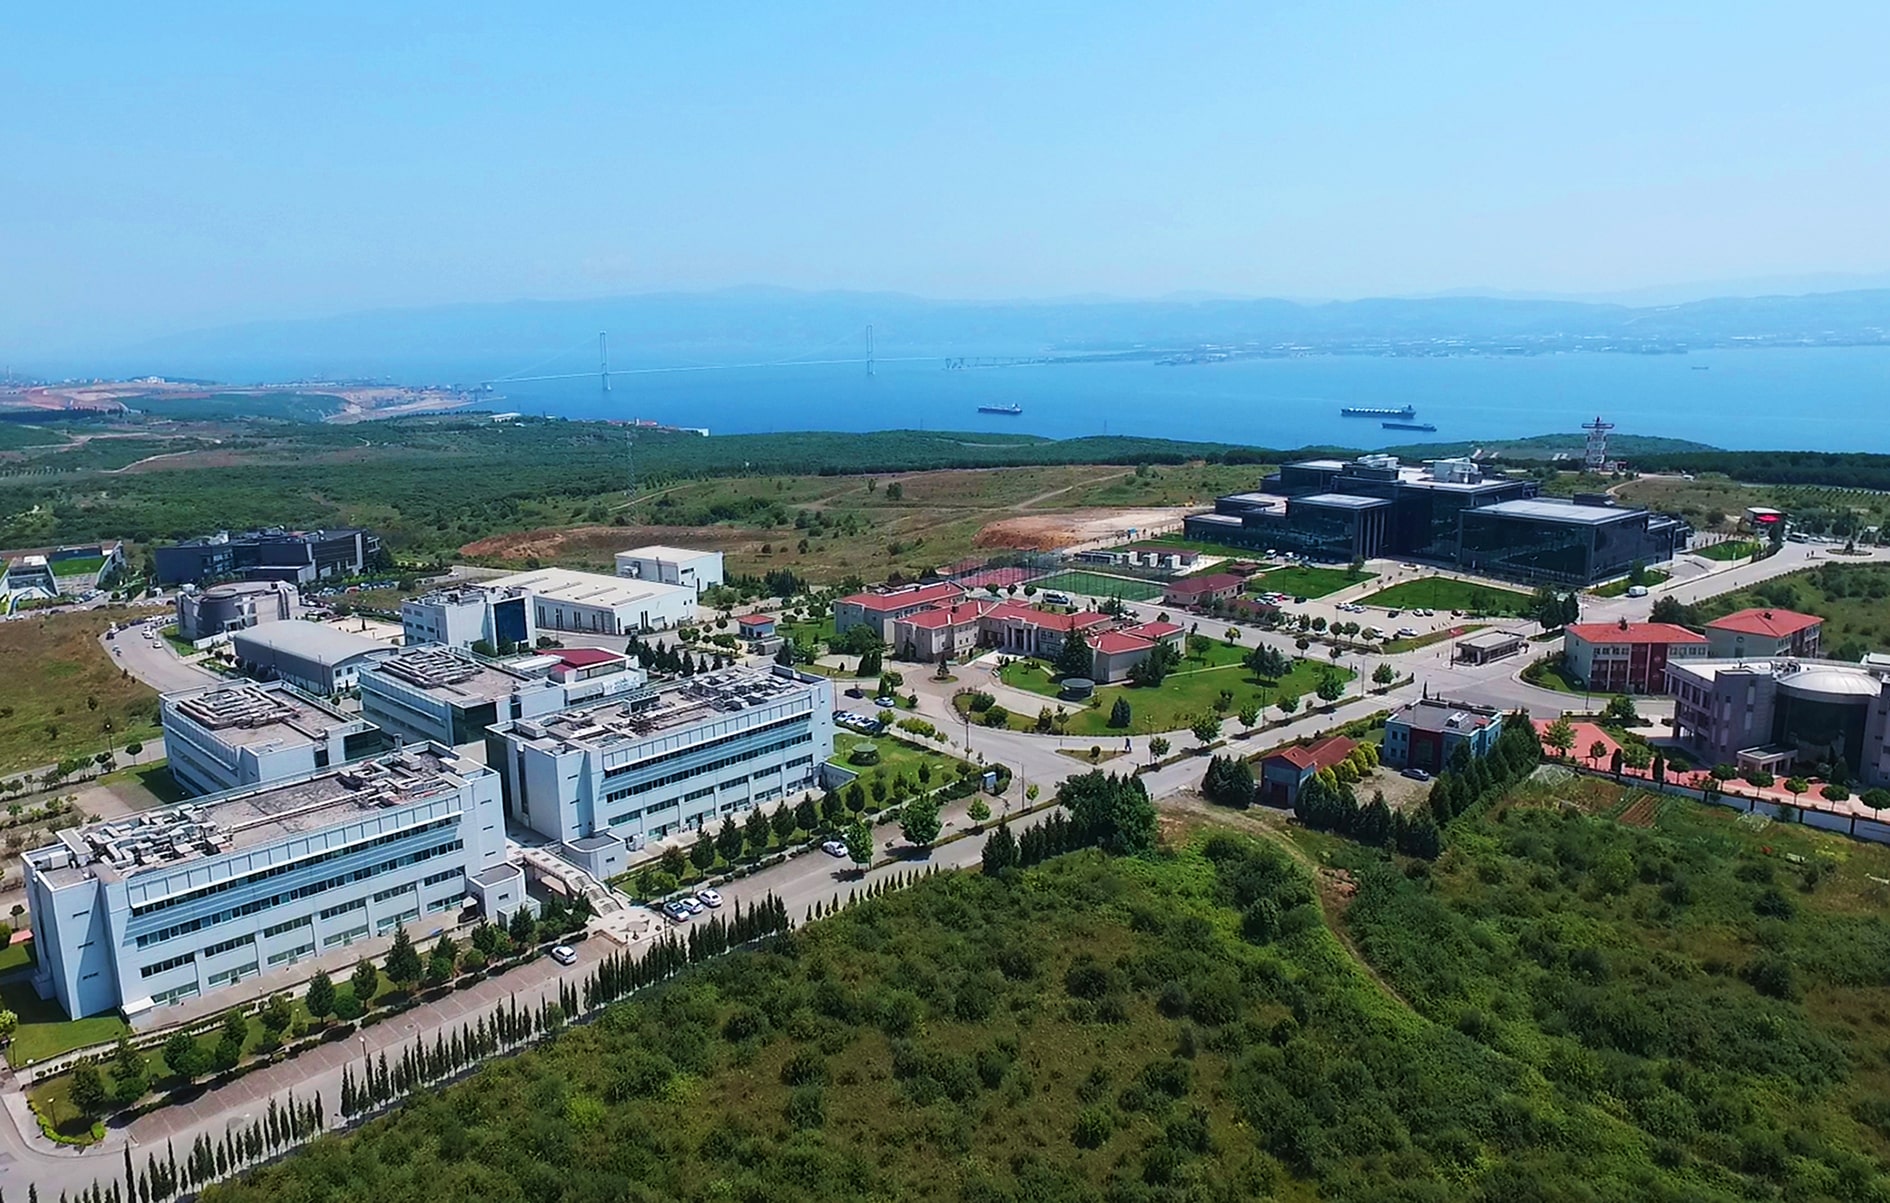 TUBITAK MAM(Marmara Research Center) MARTEK Building Automation & SCADA System